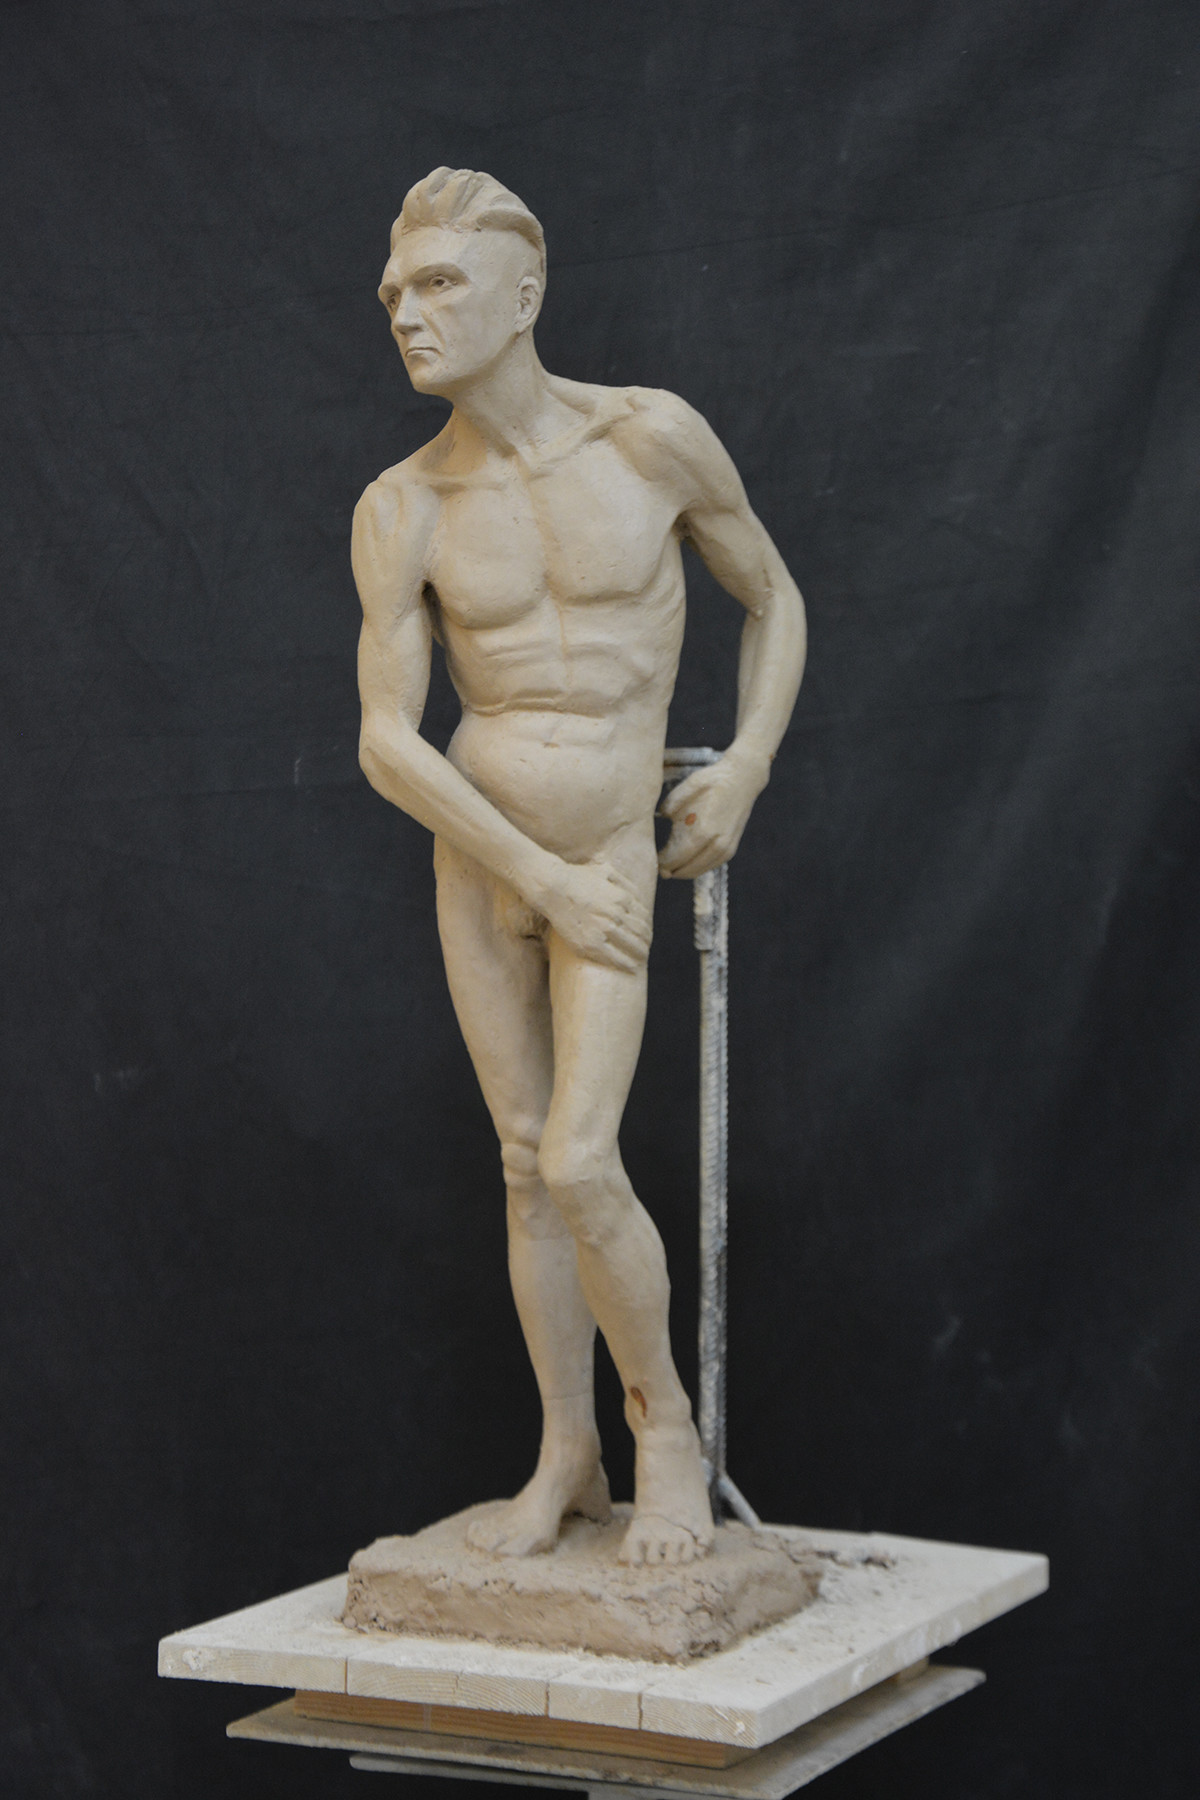 human figure clay sculpture